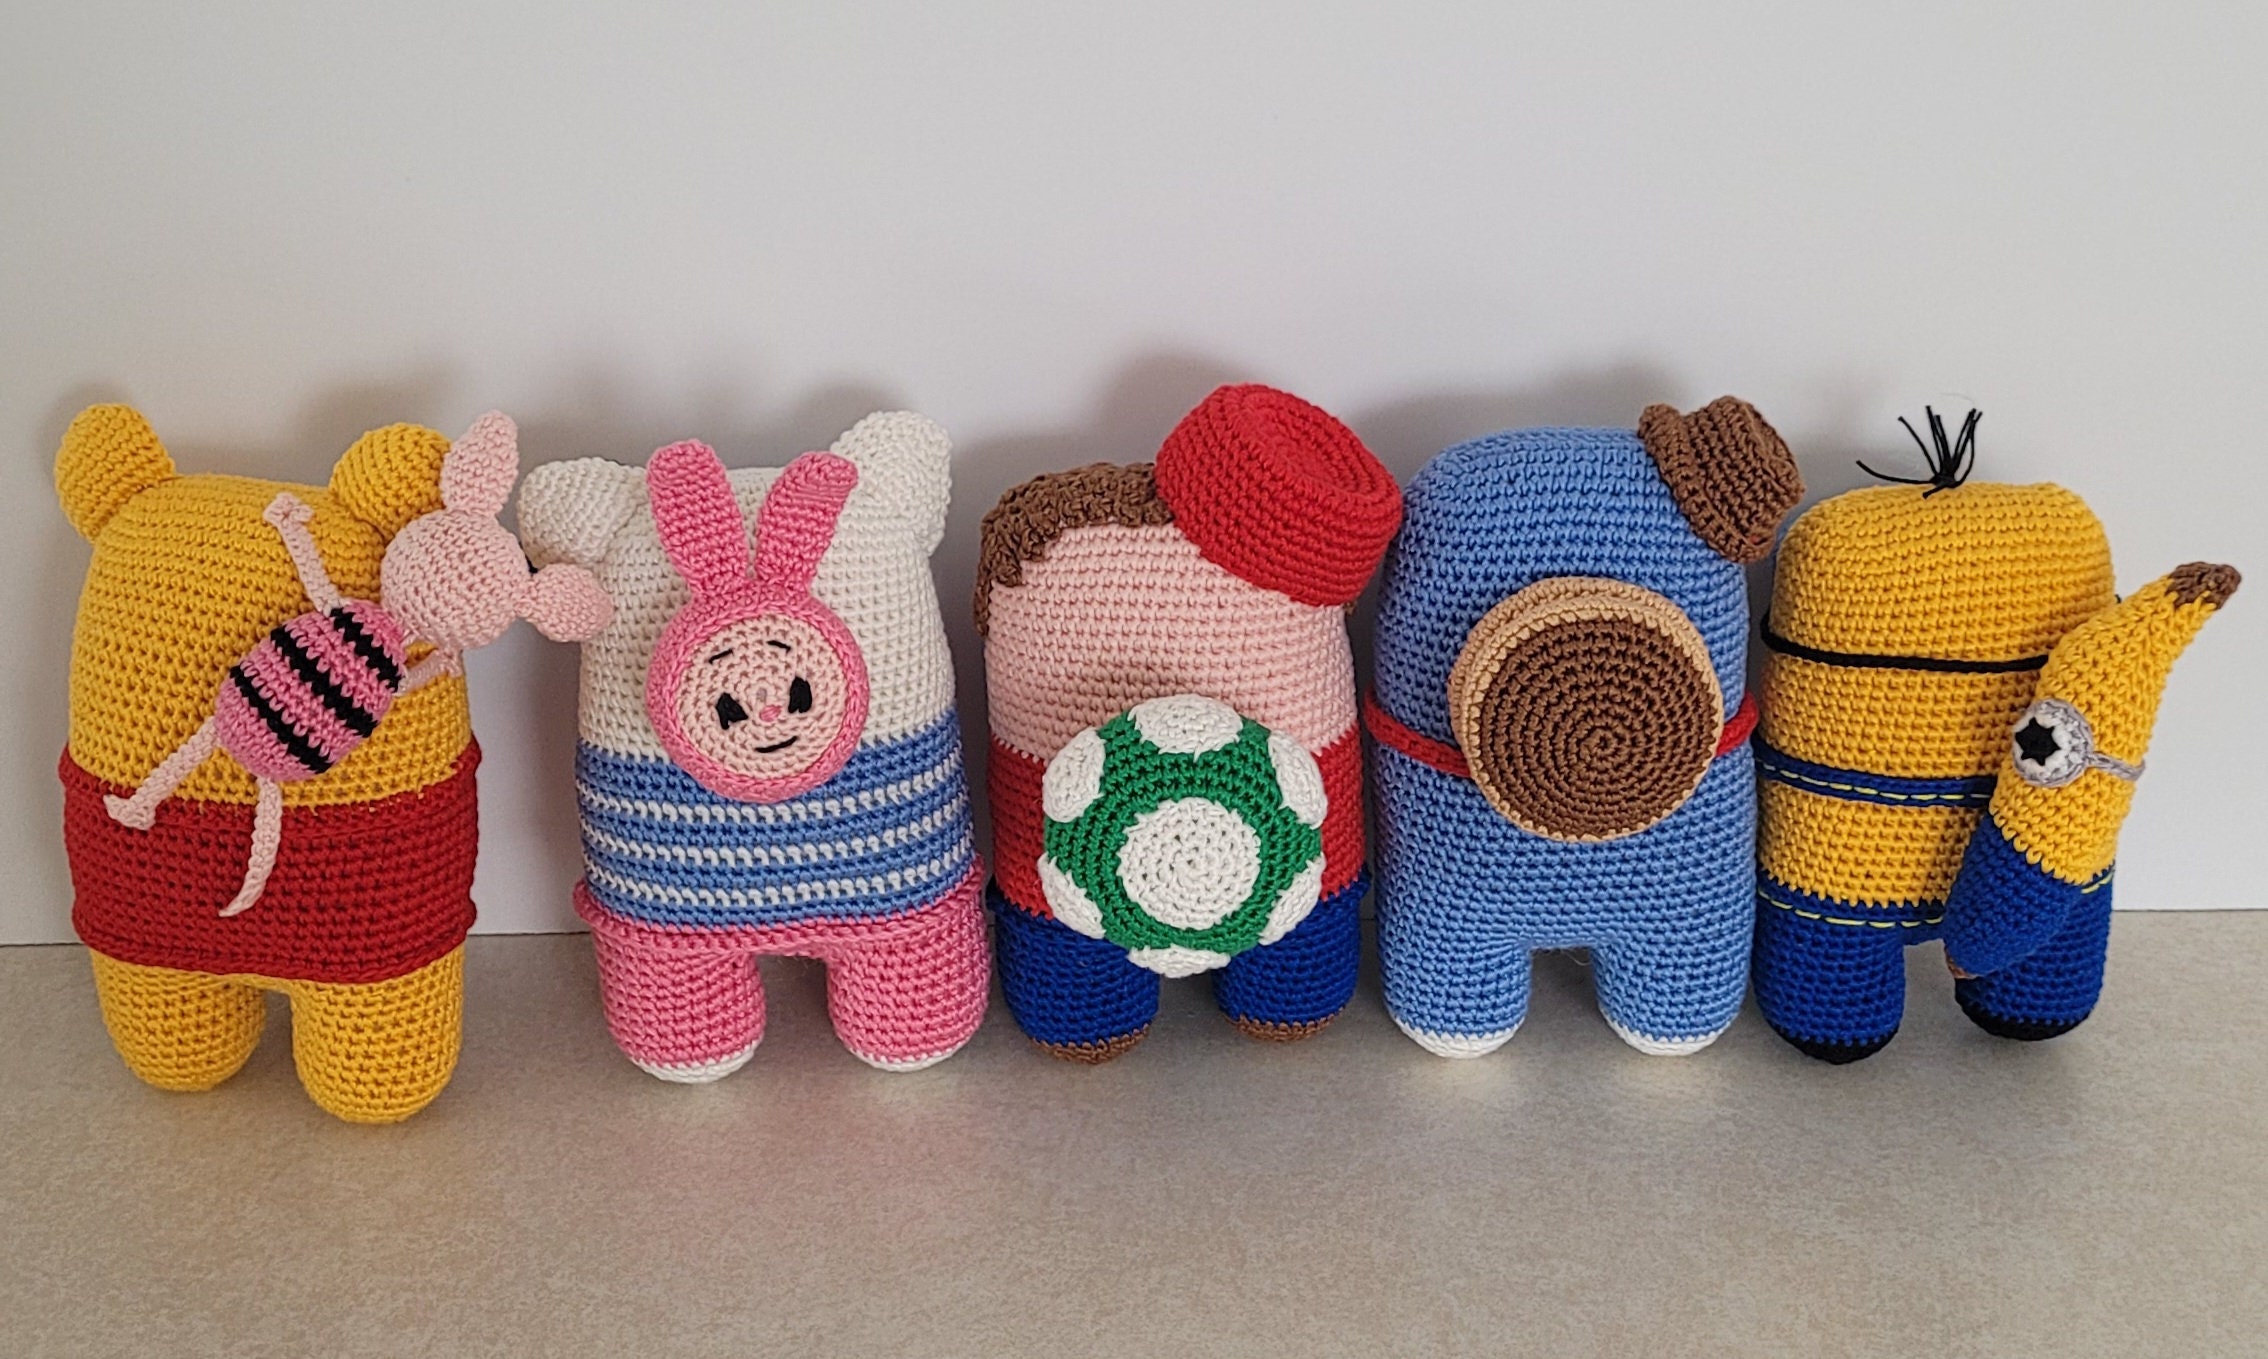 Minion Crochet Gift Card Holder - It's So Corinney